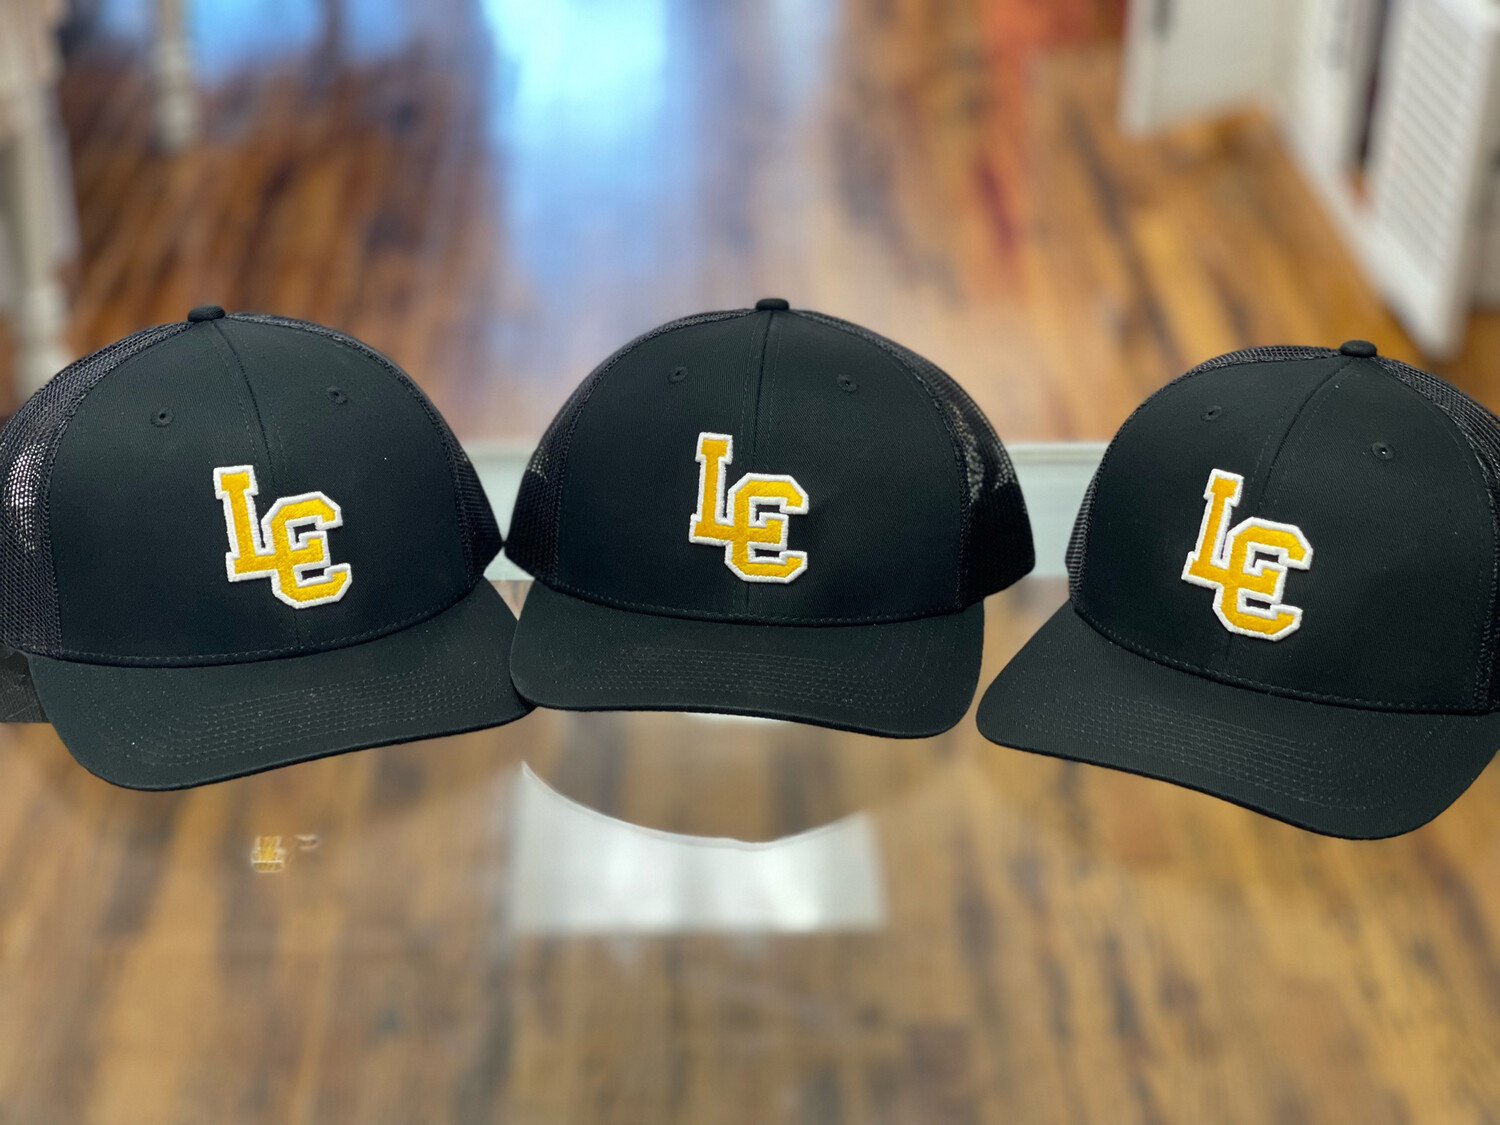 SHOP ORIGINAL Lewis County Panthers Hat